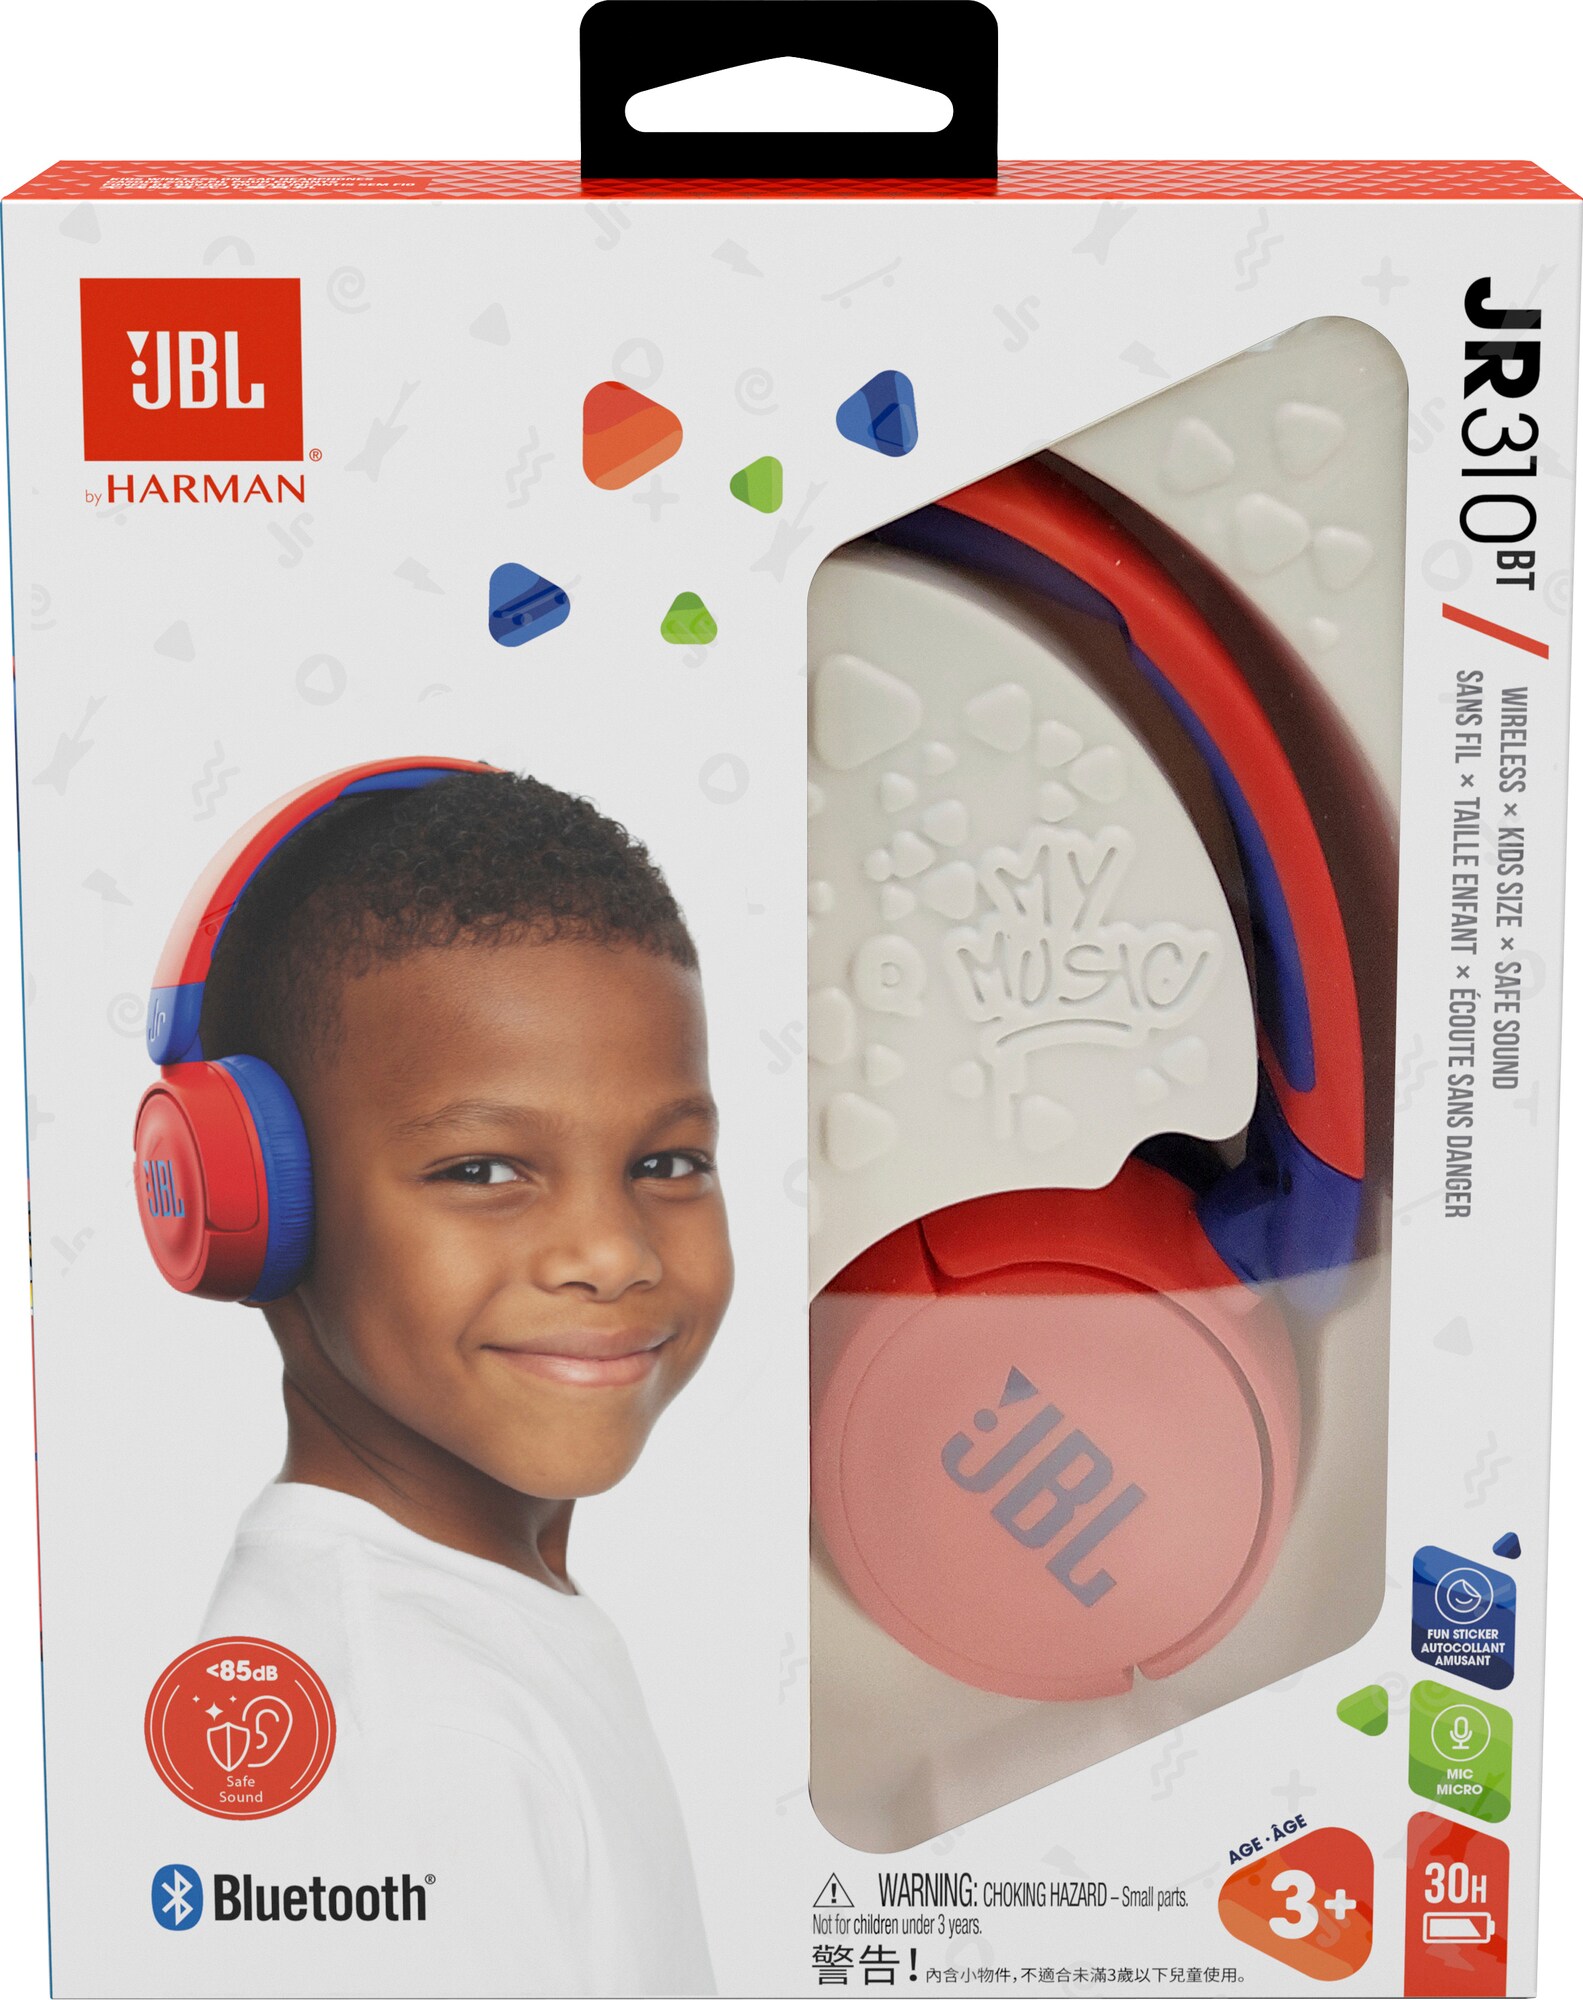 JBL Jr. 310BT trådlösa on-ear hörlurar (röd/blå) - Hörlurar - Elgiganten